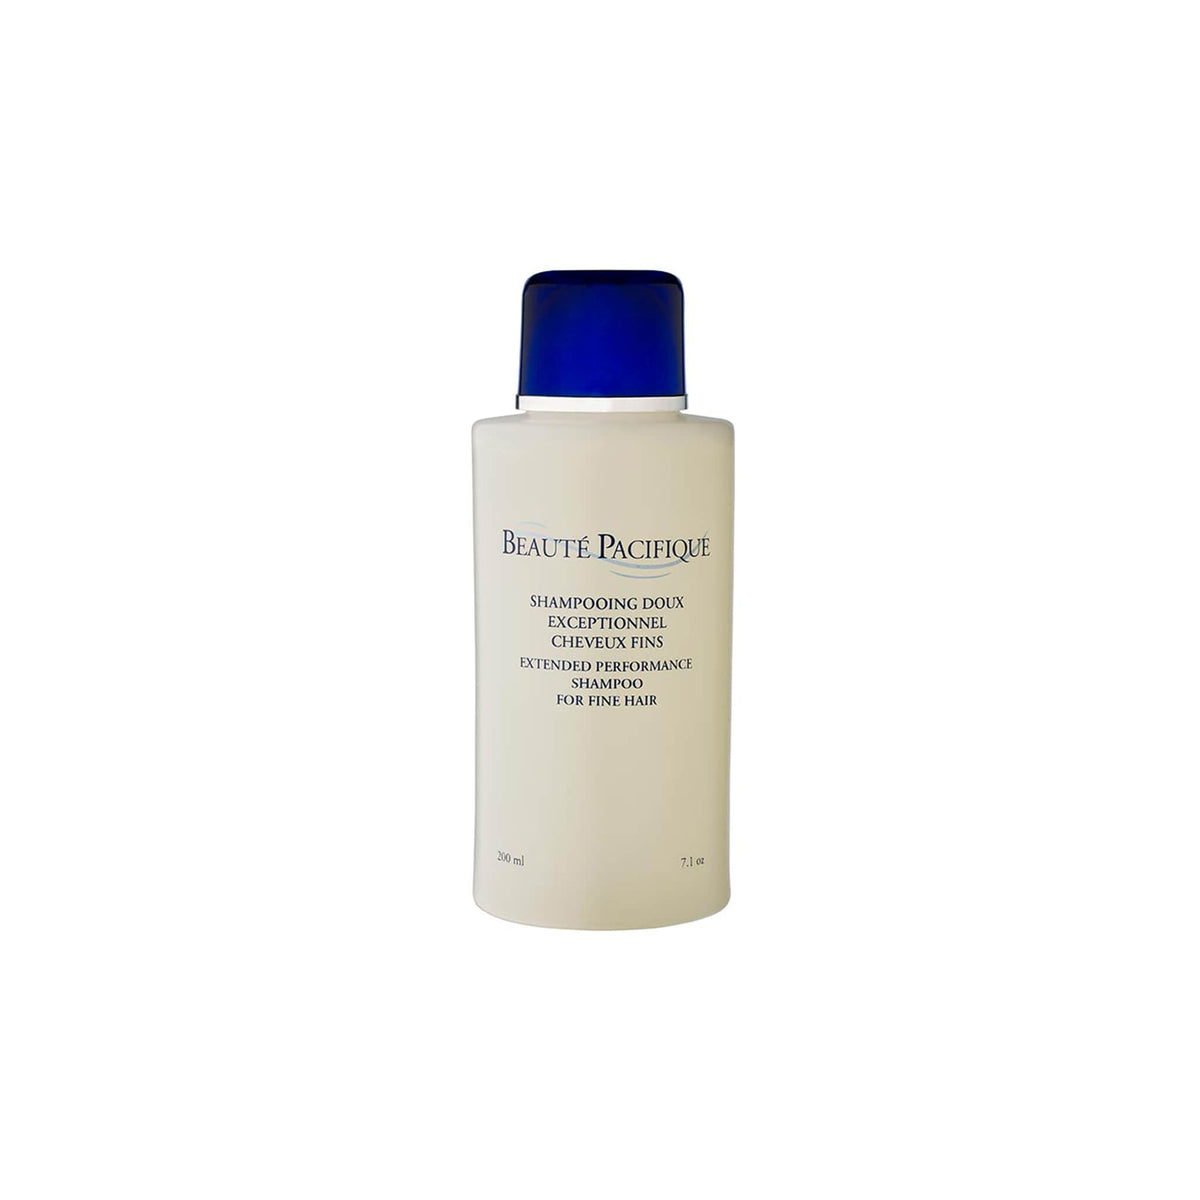 Beauté Pacifique Shampoo - for fine hair 200ml